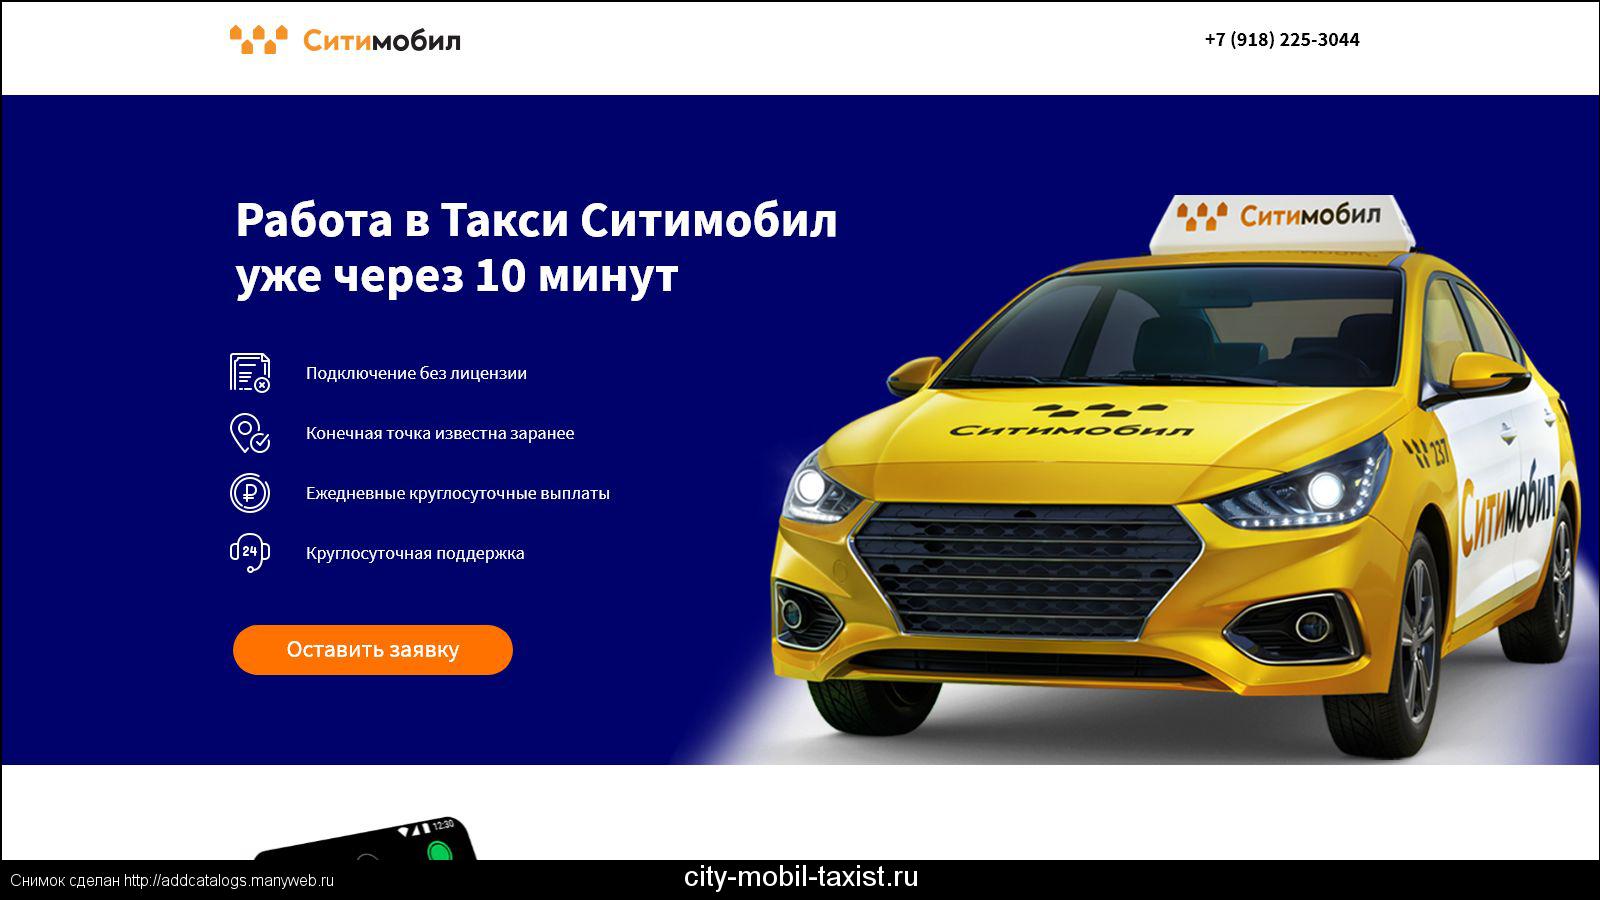 Реклама такси Сити мобил